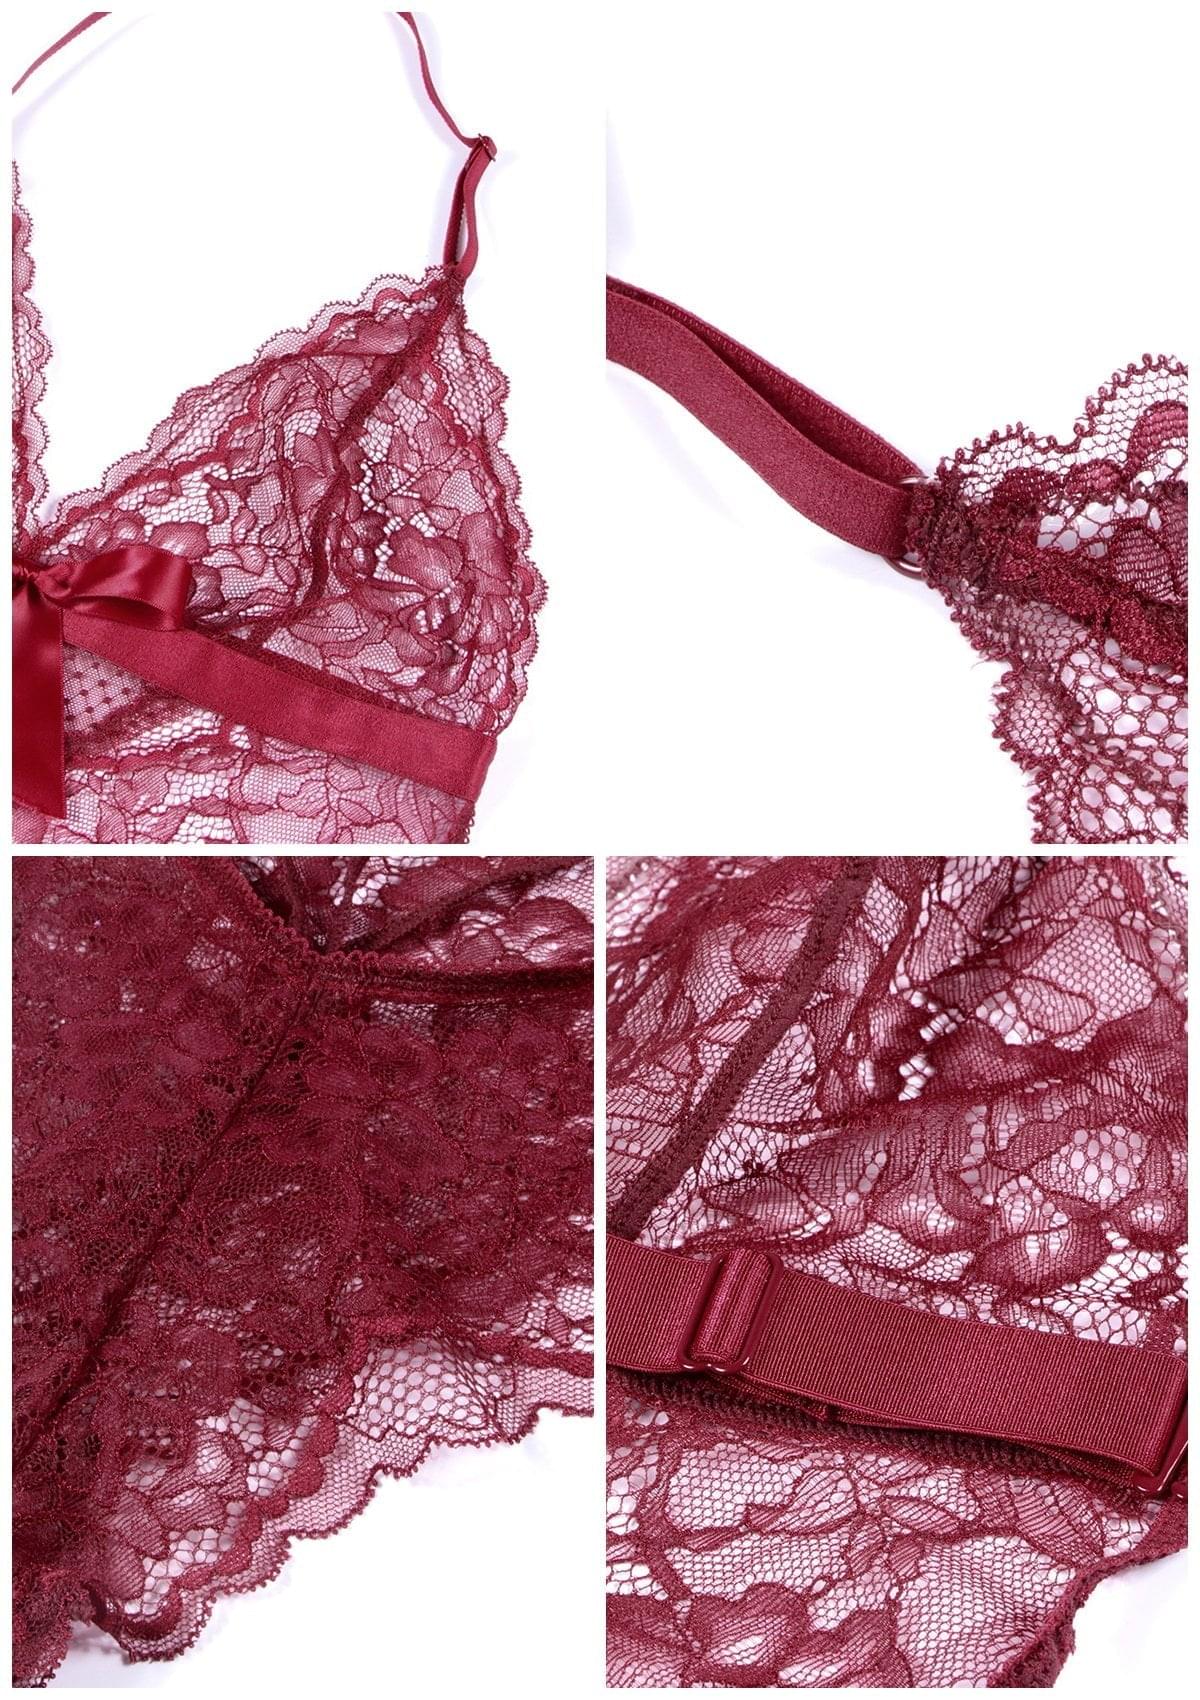 HSIA Deep V Lace Sheer Mesh Bodysuit Lingerie - XXL / Red